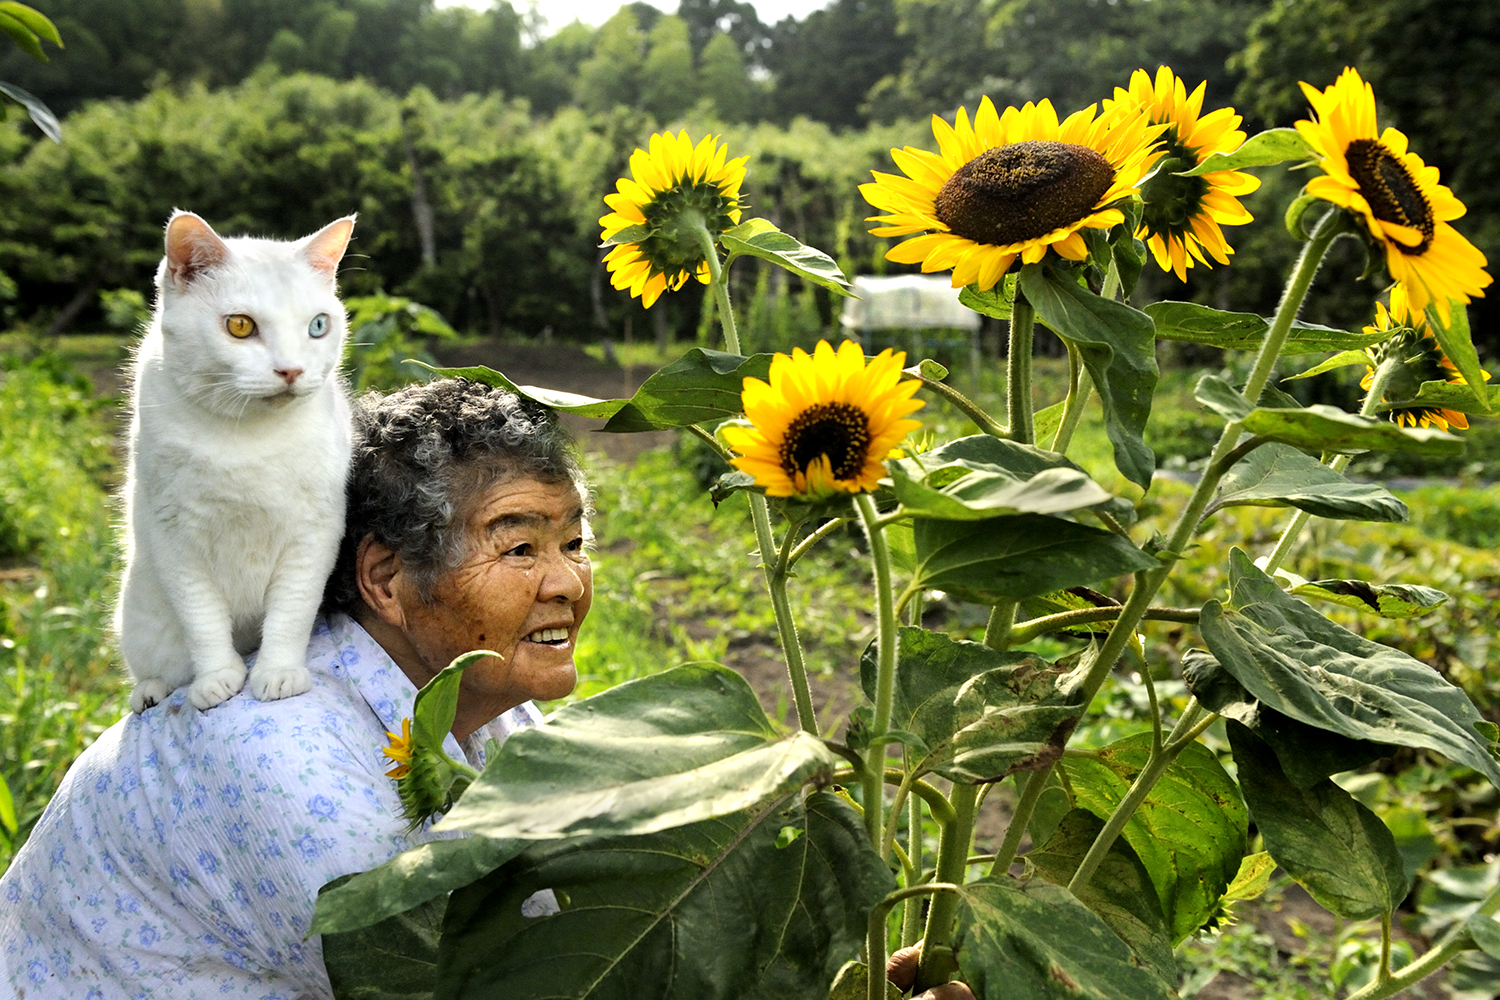 Fukumaru, The Friendliest Cat With Heterochromia